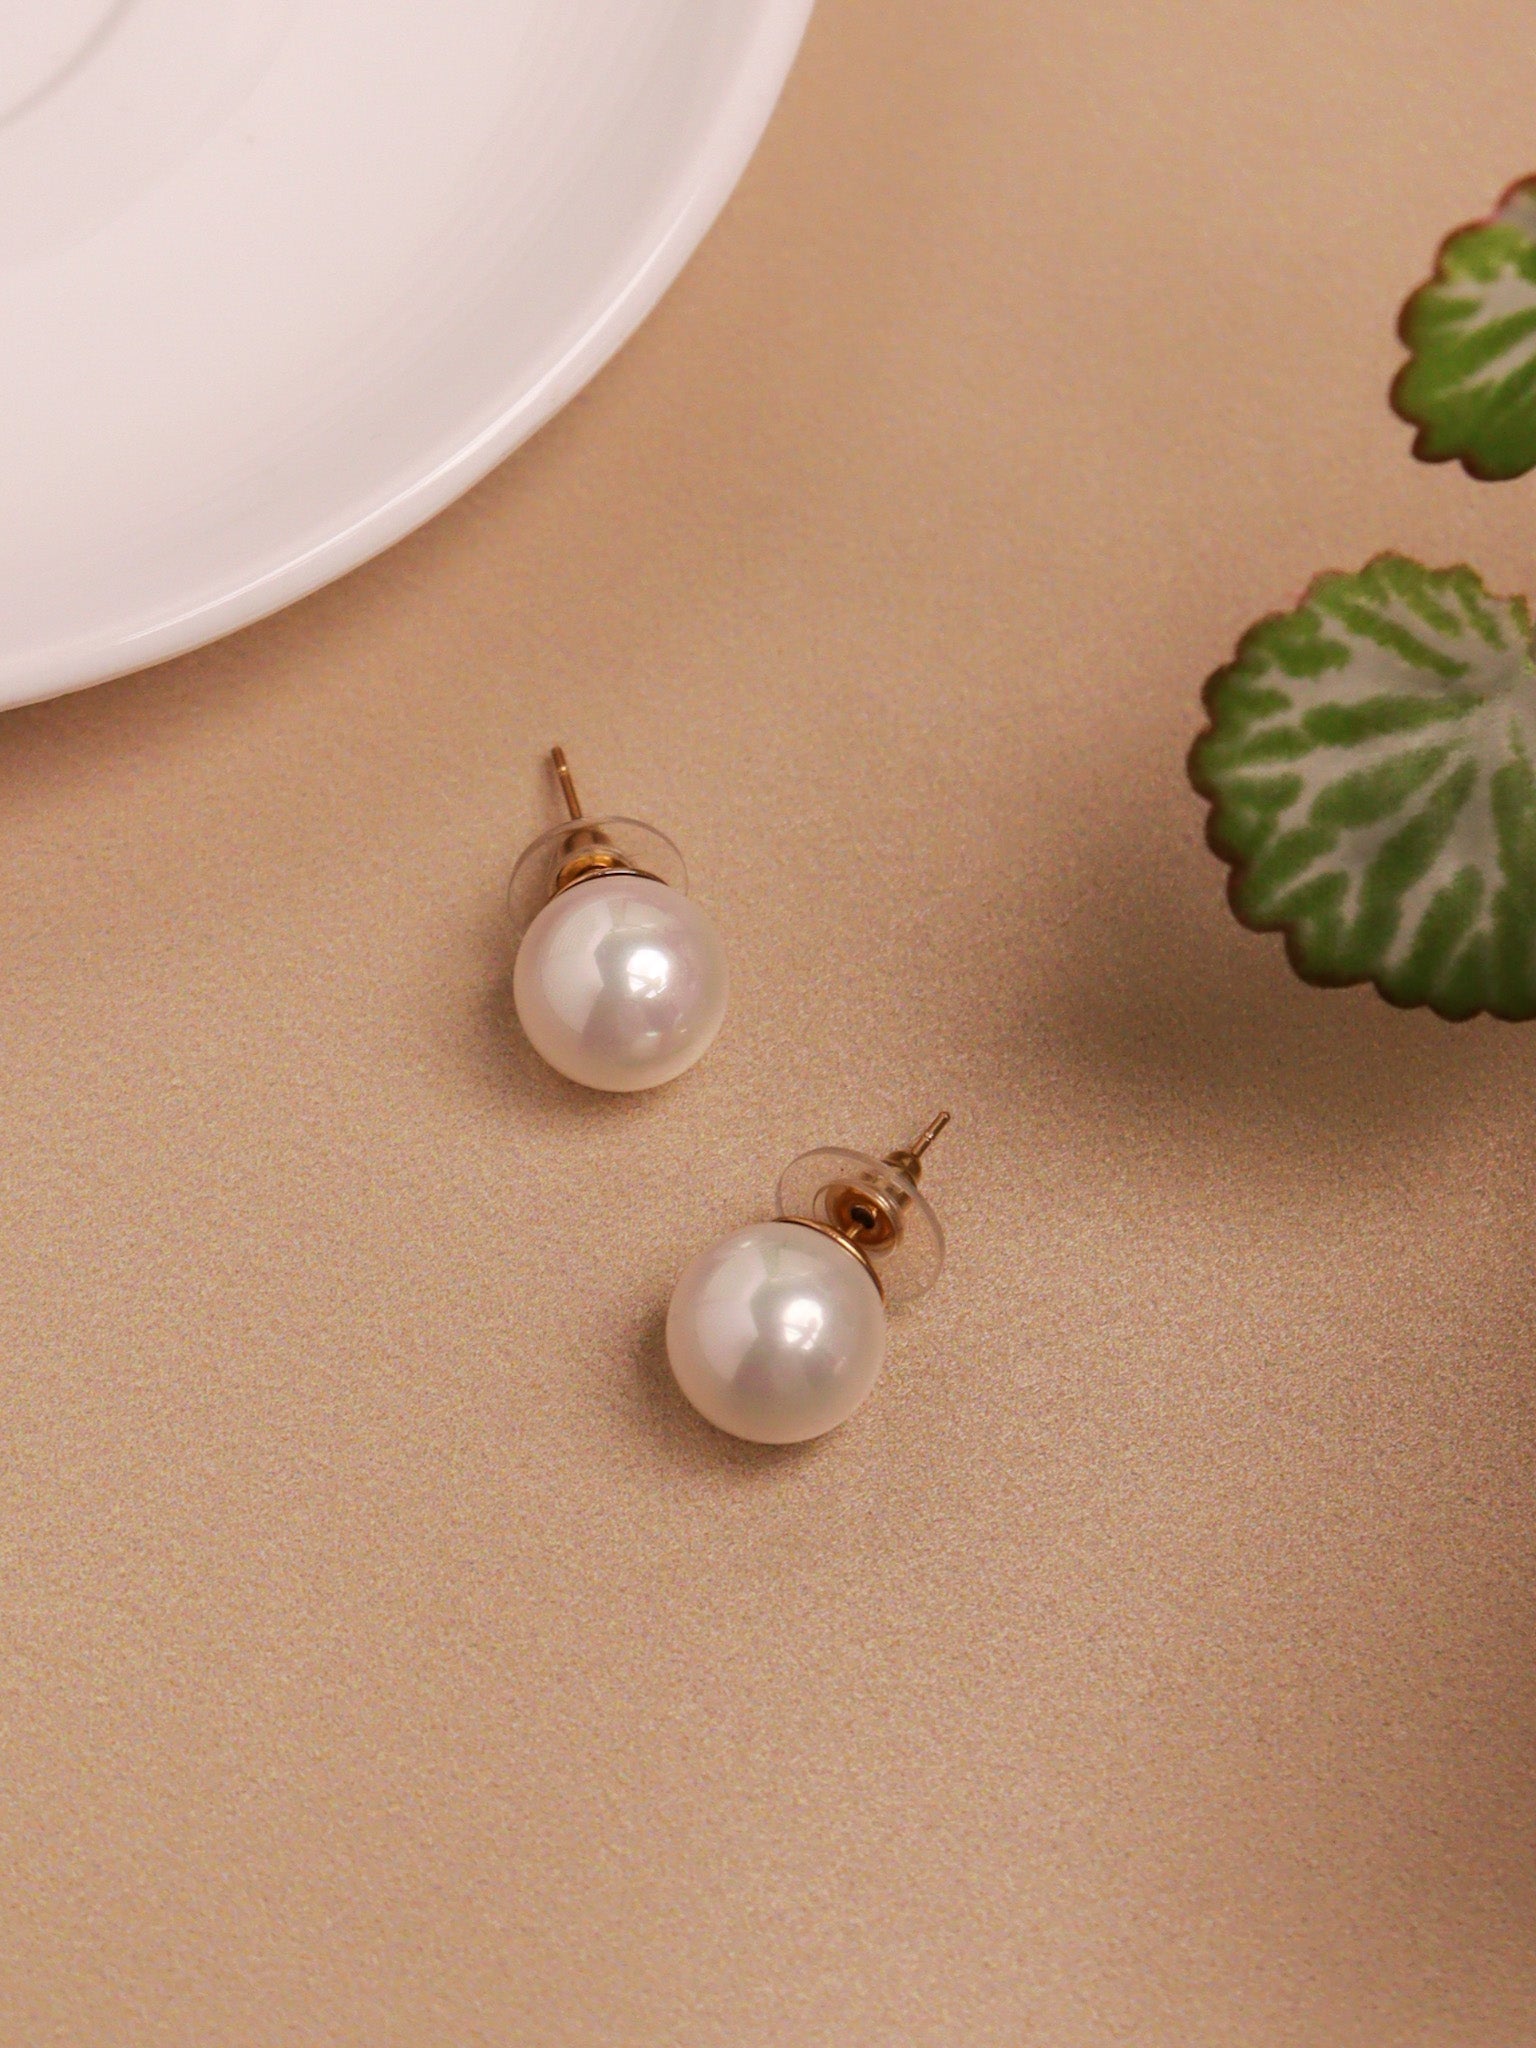 Aggregate 267+ white pearl earrings latest